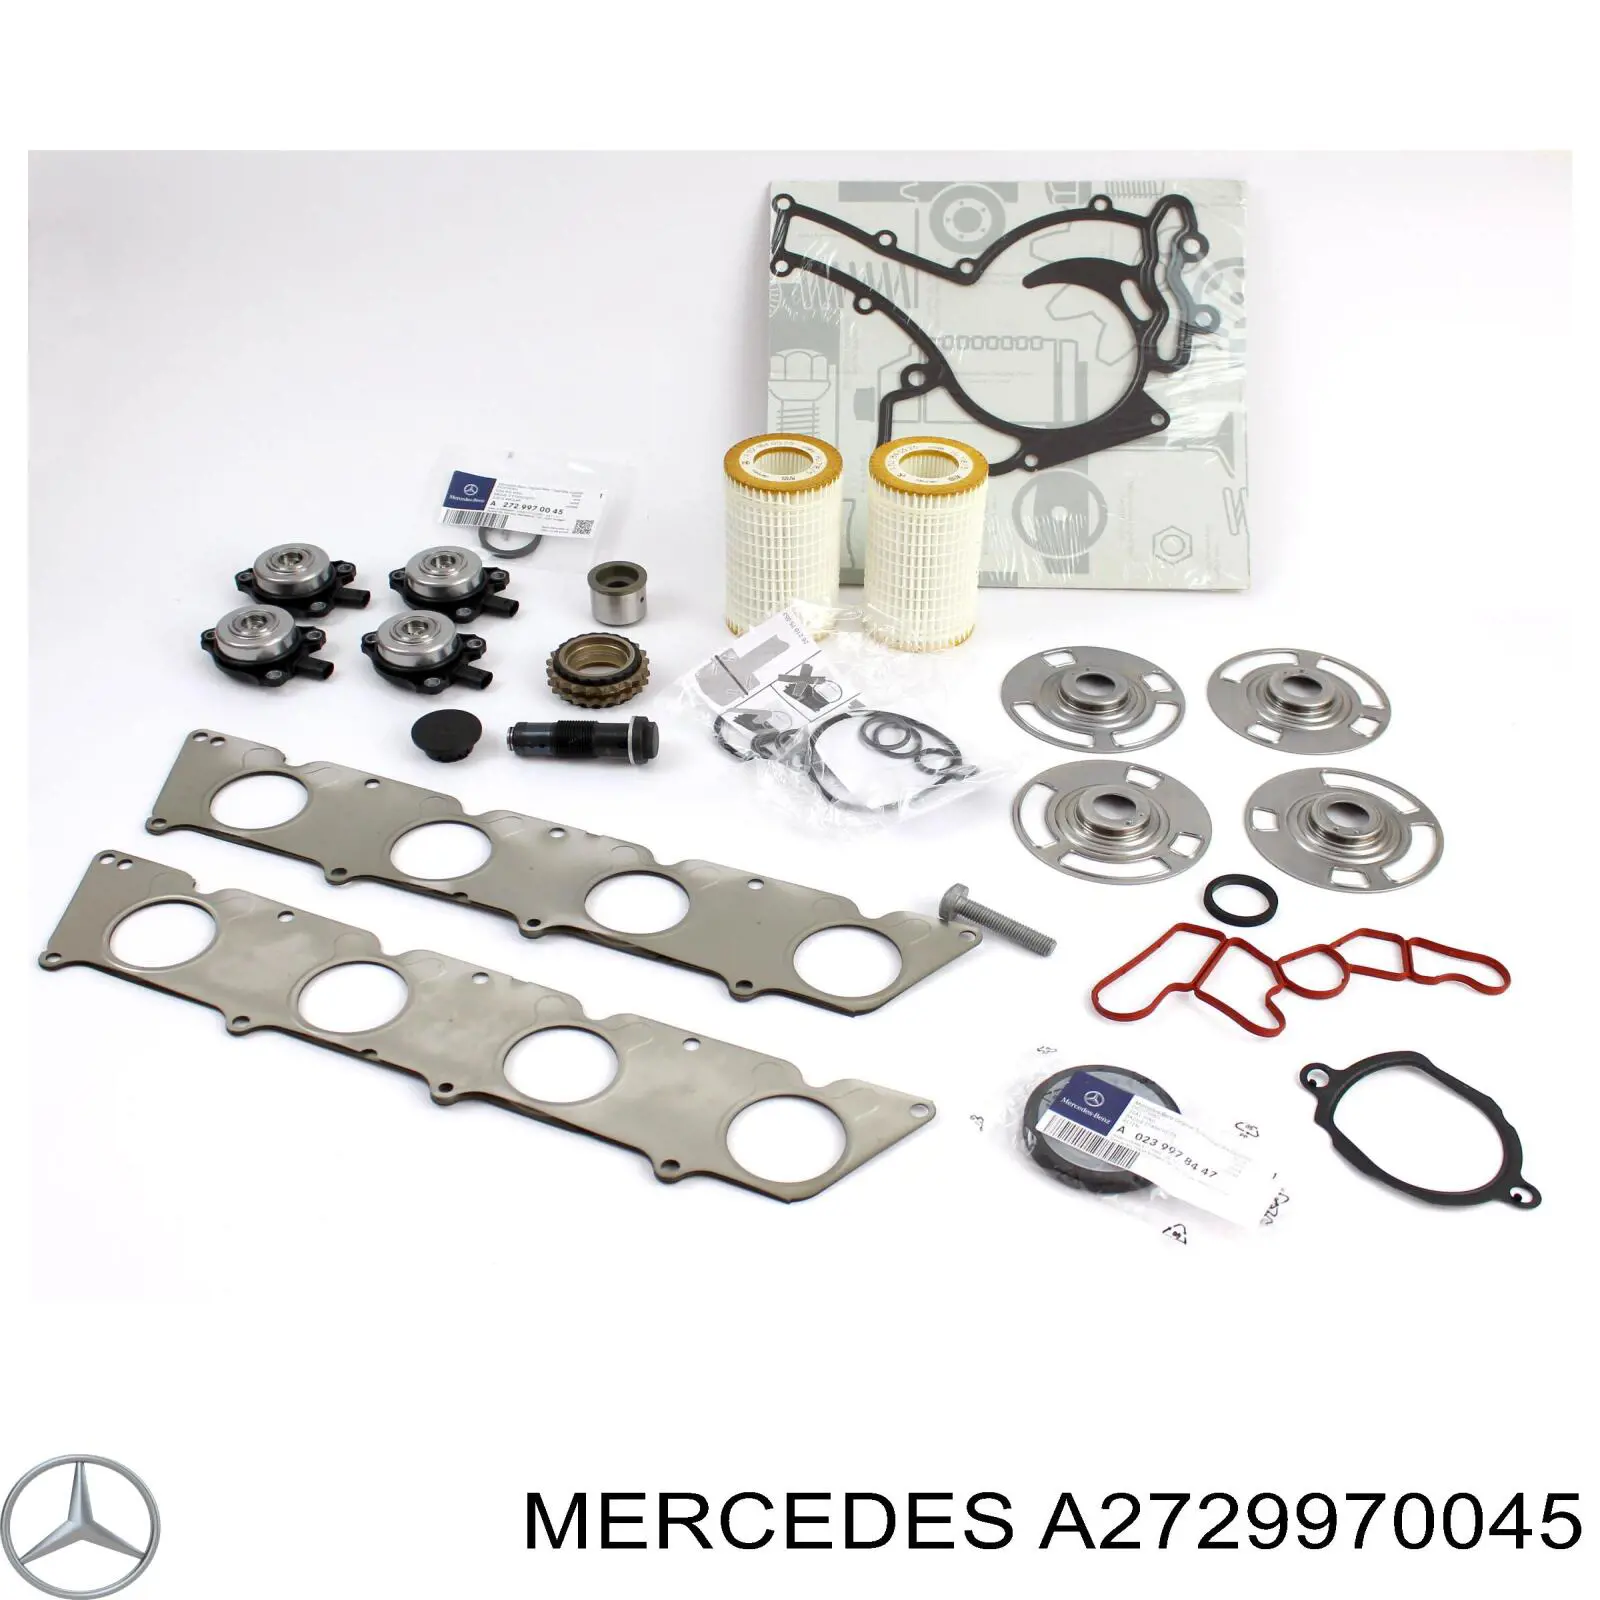 Vedante de tampa dianteira de motor para Mercedes S (C216)